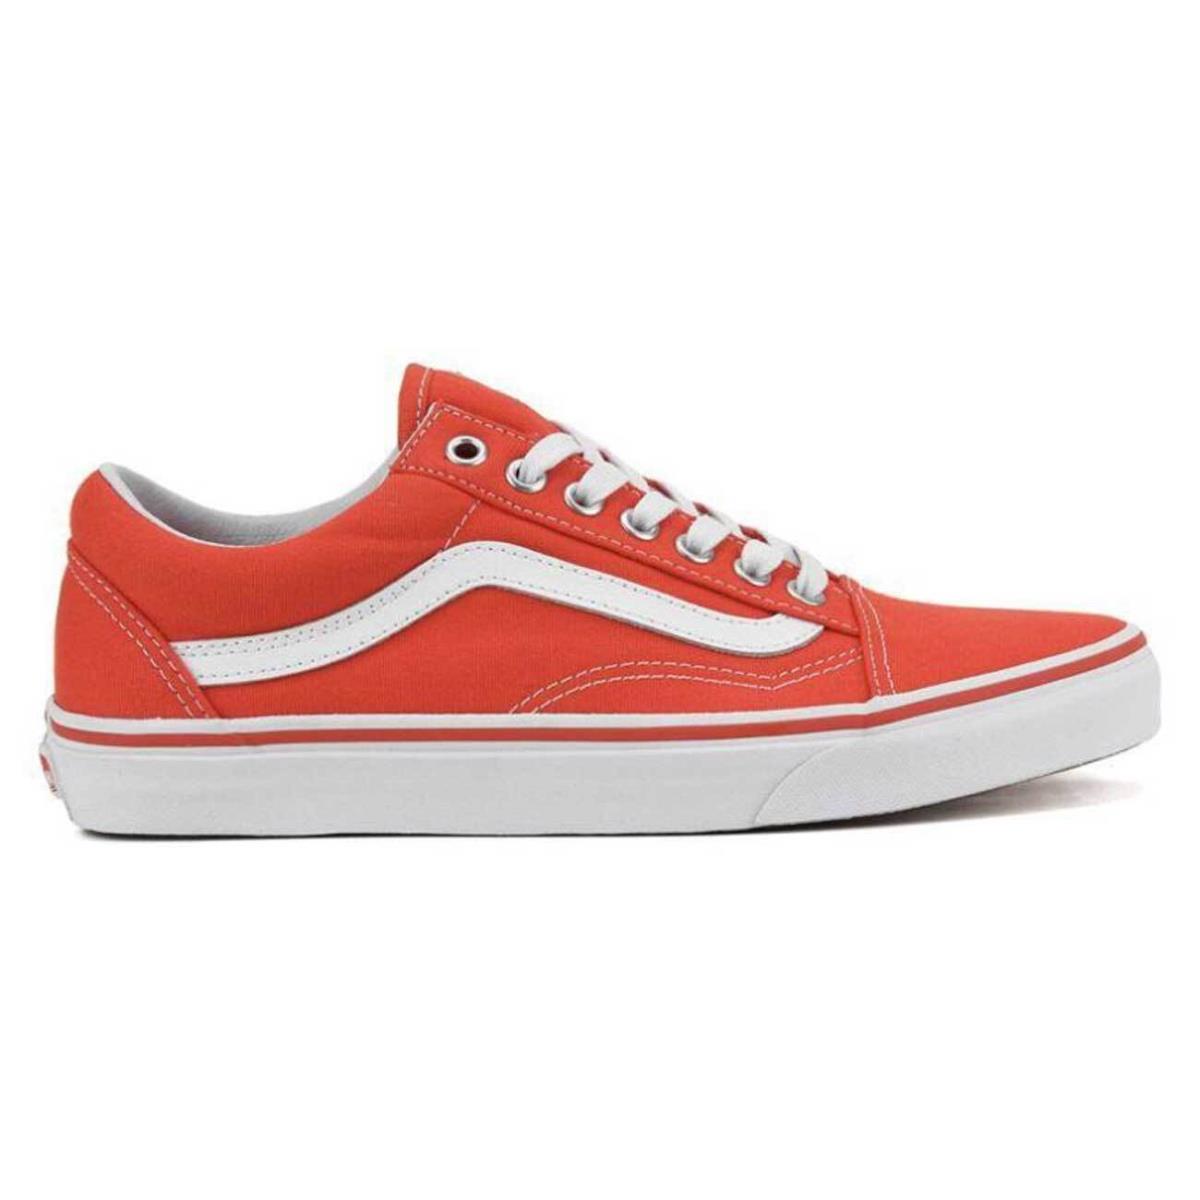 Vans Old Skool Cherry Tomato/true White VN0A38G1MOO Unisex Casual Sneakers - Orange